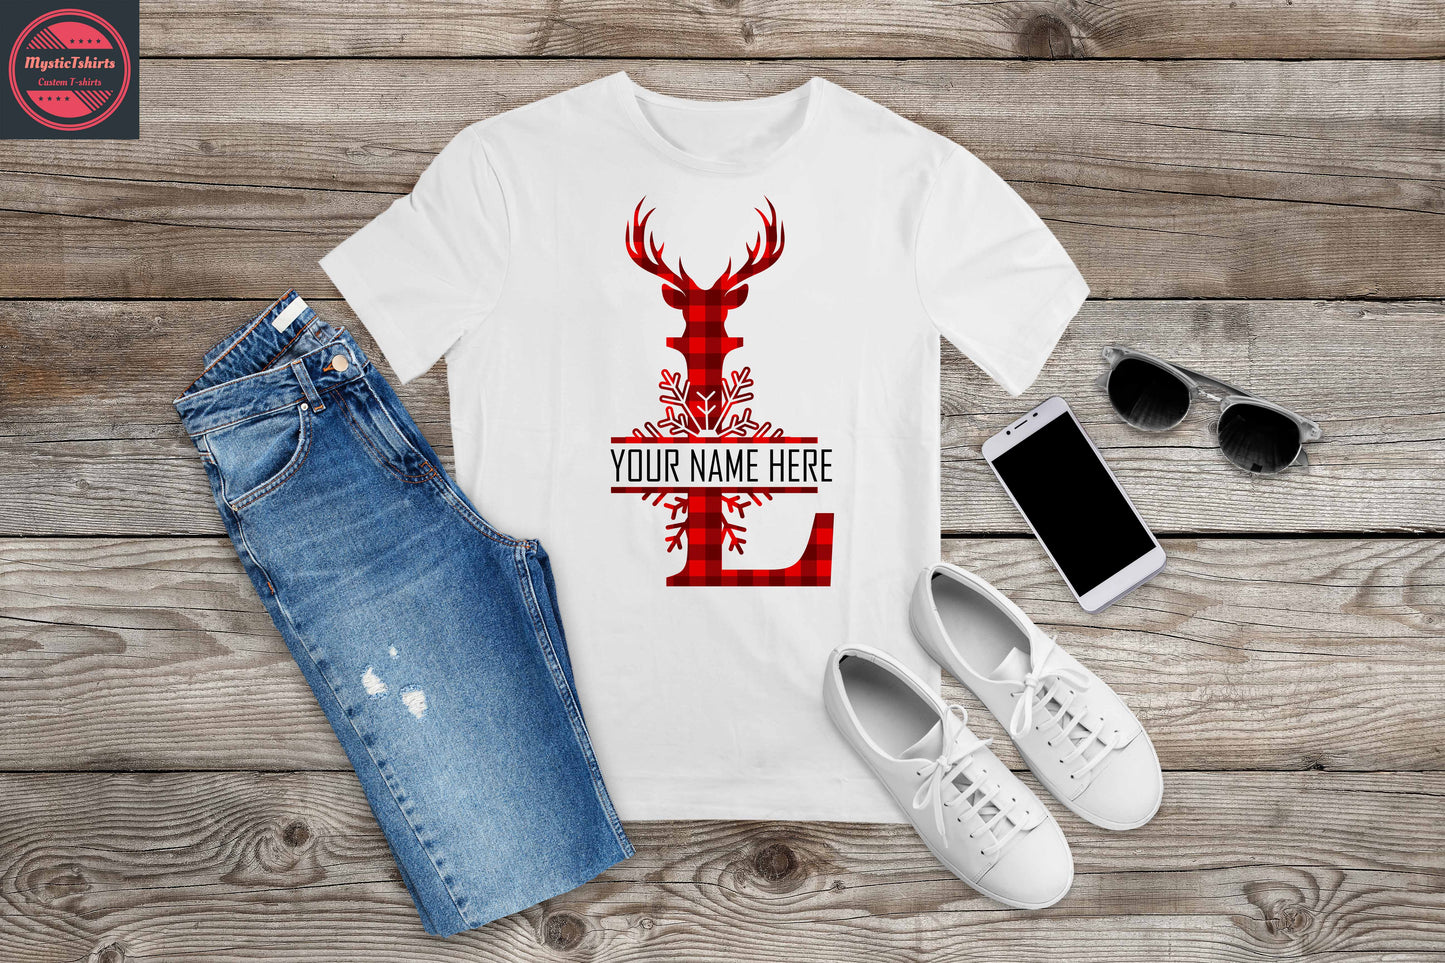 358. MONOGRAMMED RED REINDEER CHRISTMAS L, Custom Made Shirt, Personalized T-Shirt, Custom Text, Make Your Own Shirt, Custom Tee